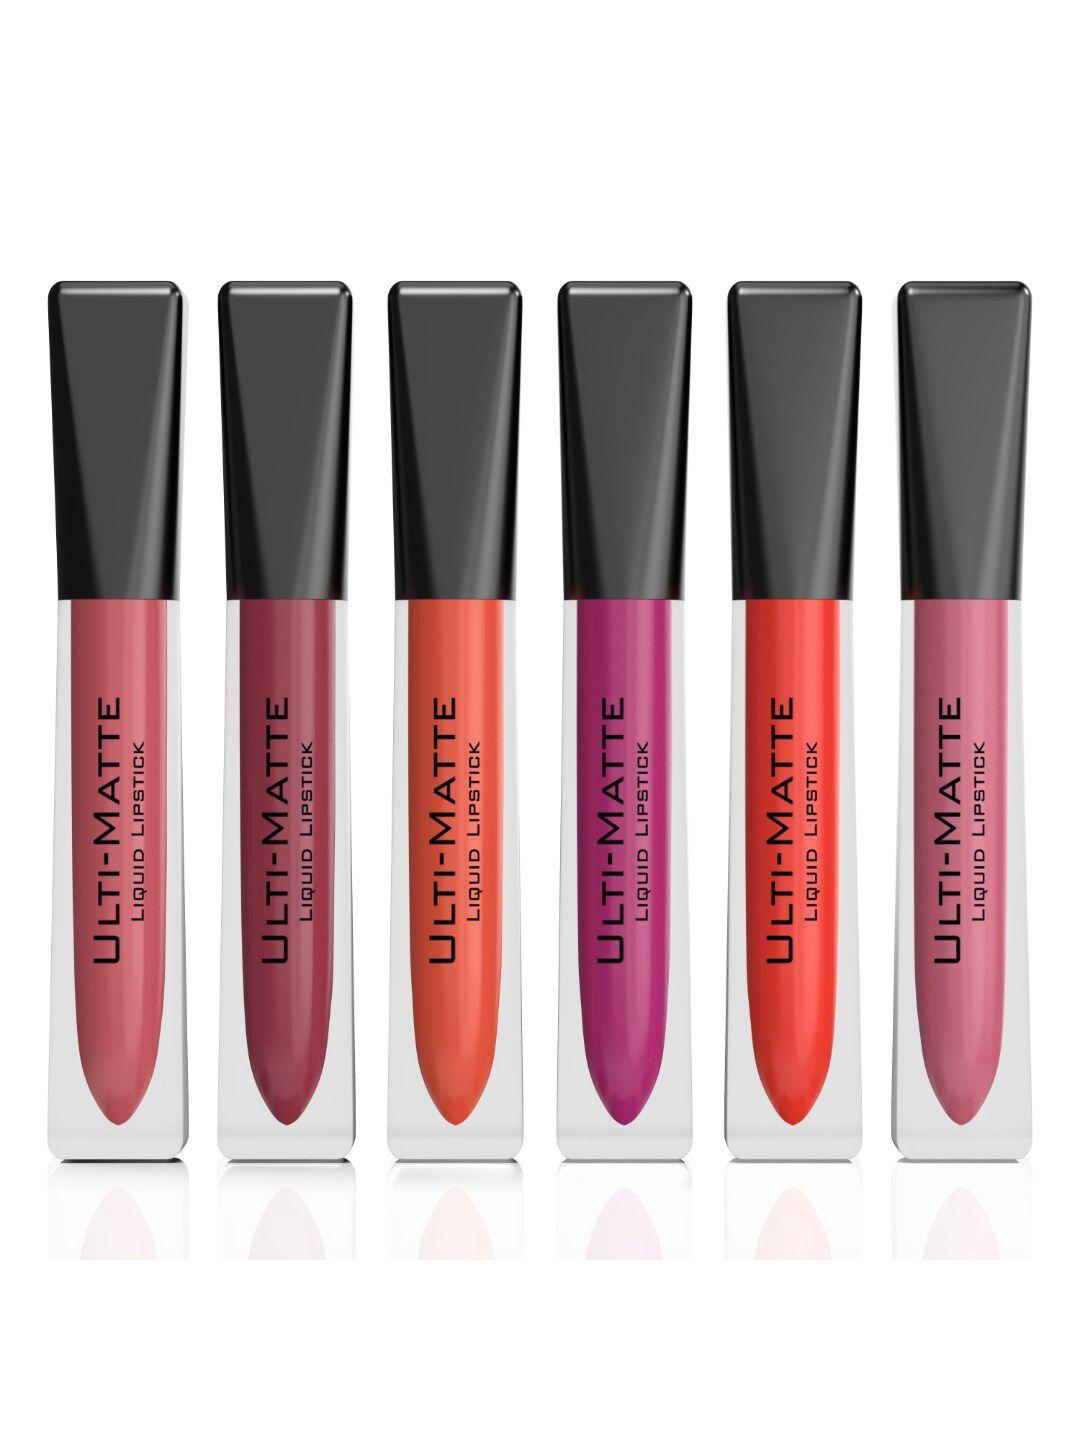 bella voste set of 6 ulti-matte liquid lipsticks 3.7ml each - shade 03, 04, 09, 10, 15, 16